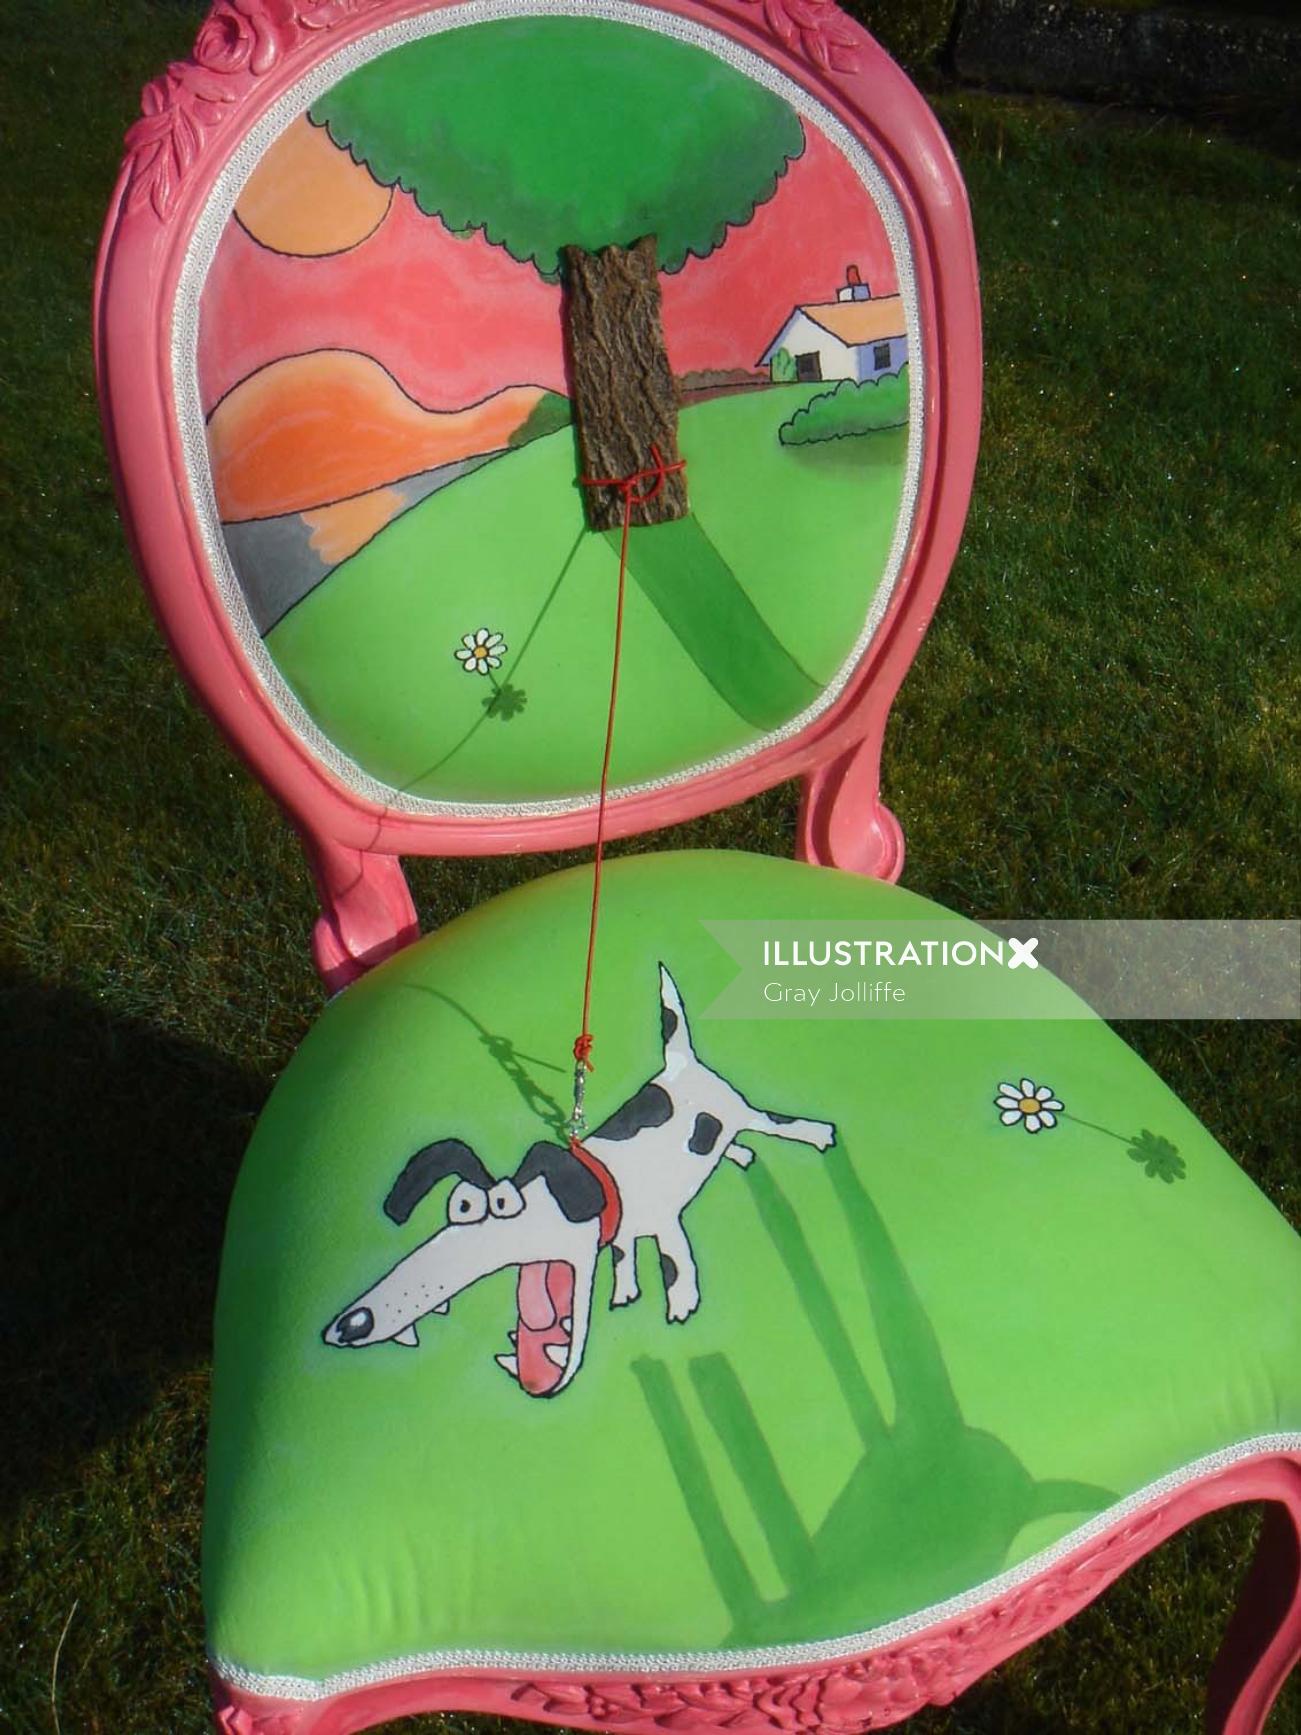 Comic art of Gray Jolliffe customized chair